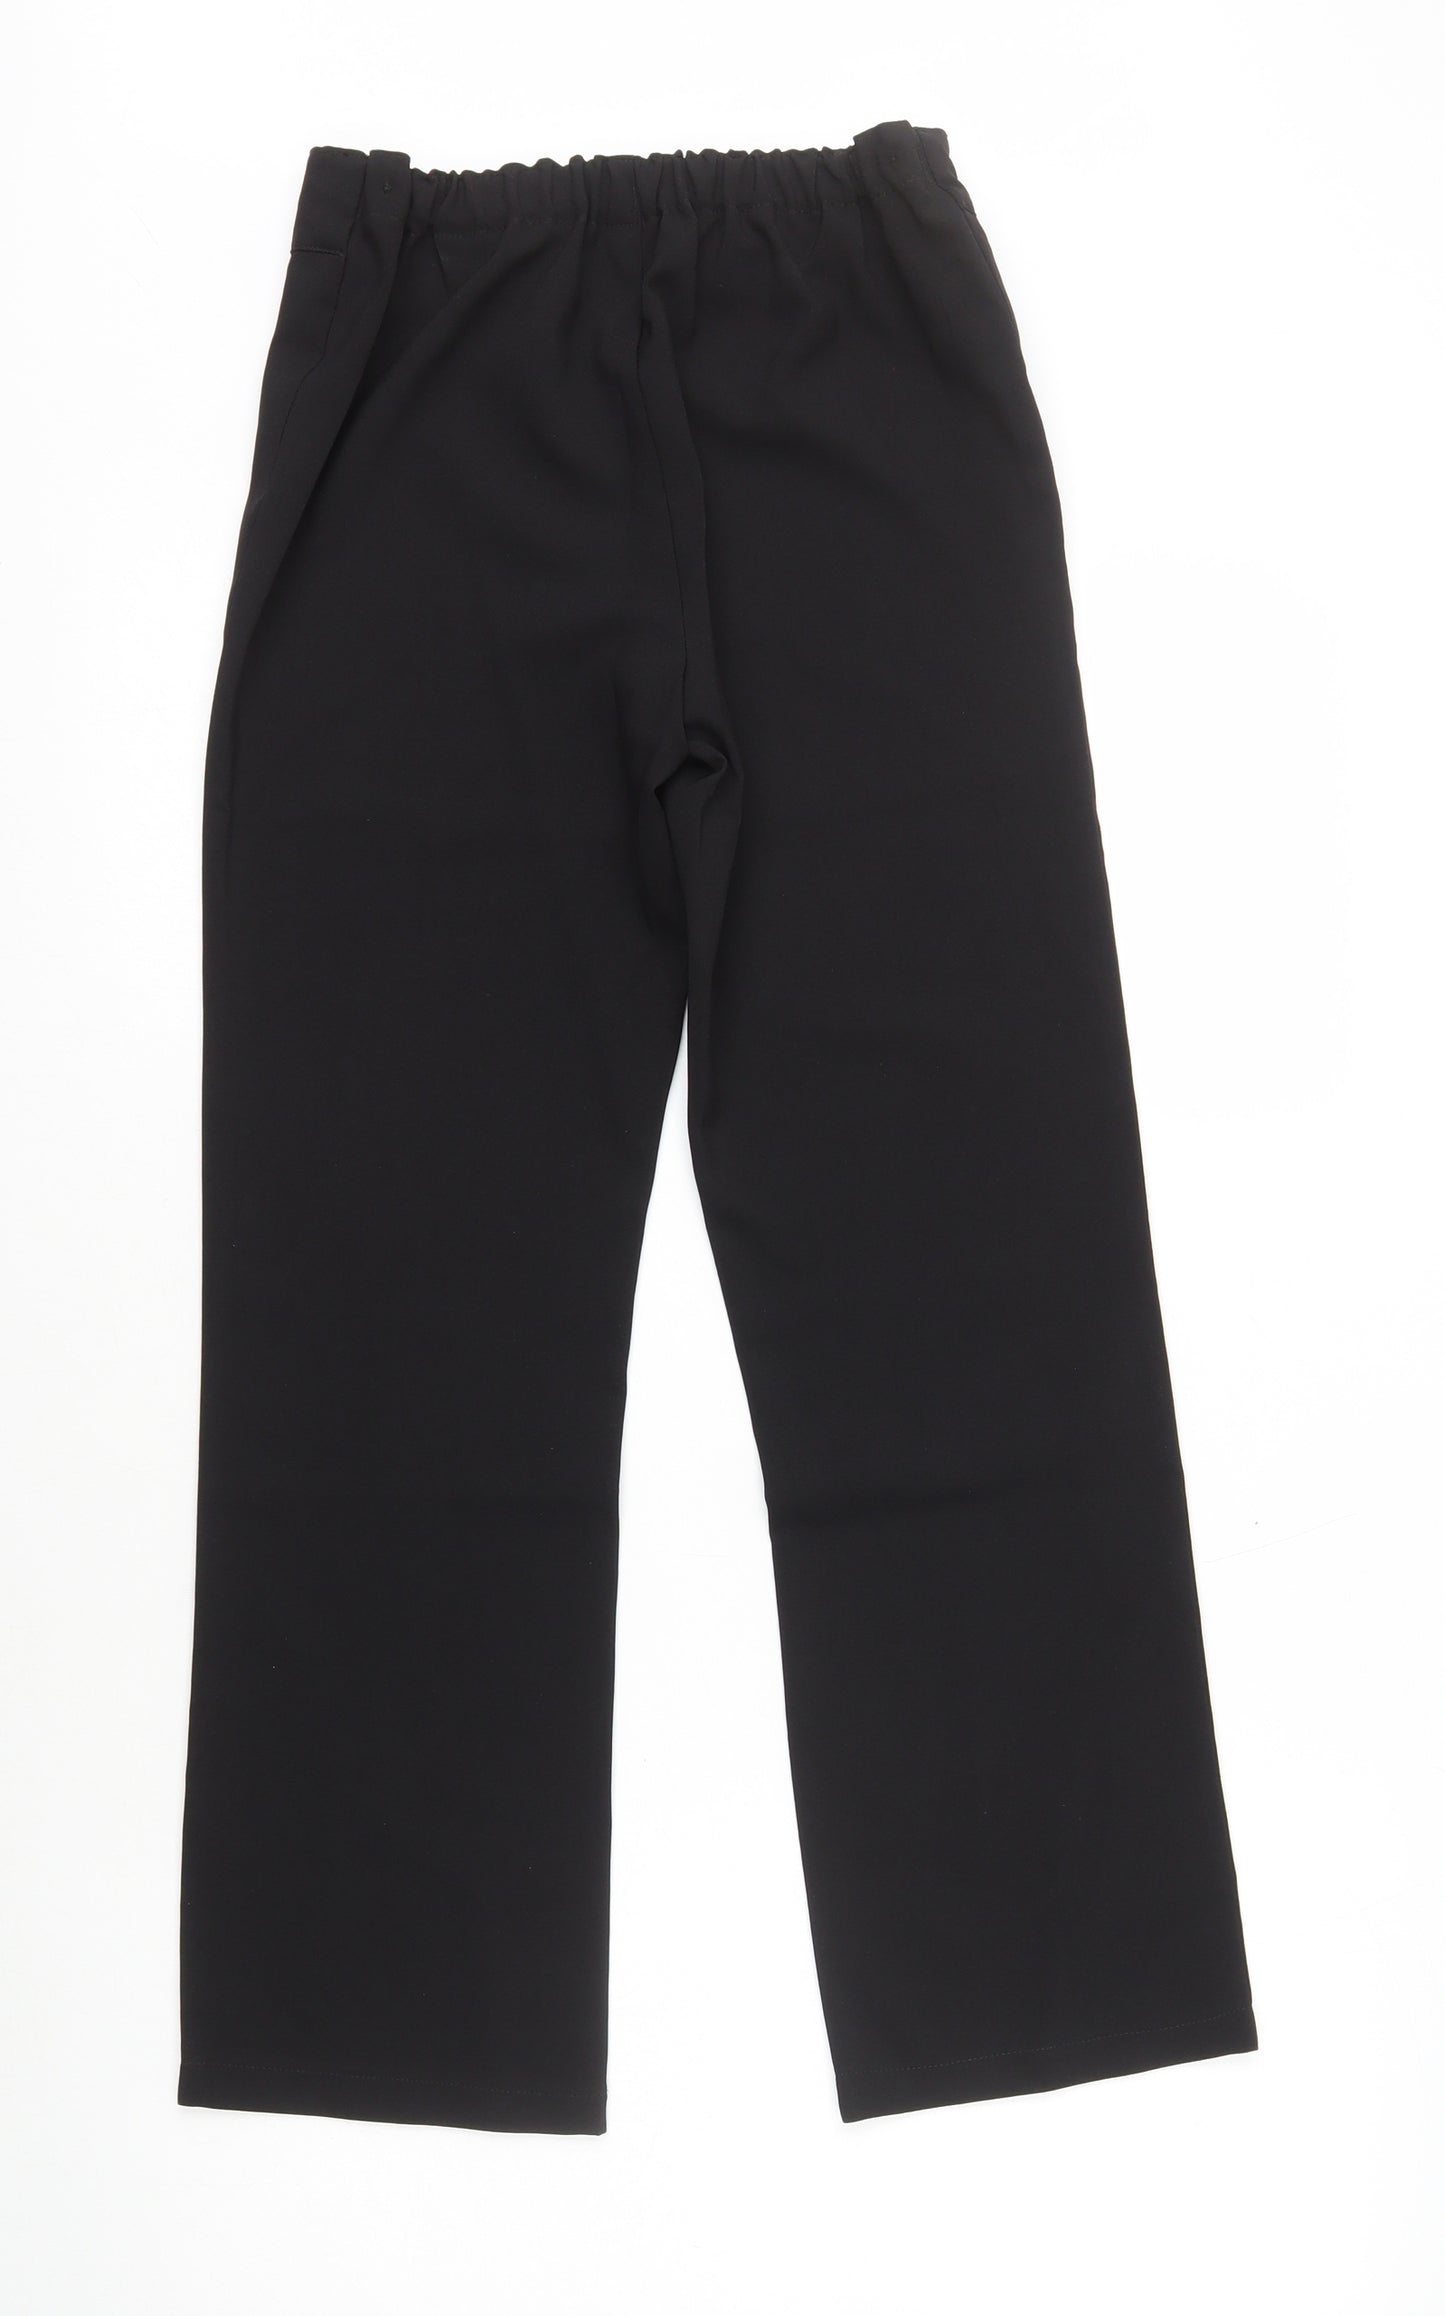 SCHOOLWEAR Girls Black Polyester Dress Pants Trousers Size 12 Years L27 in Regular